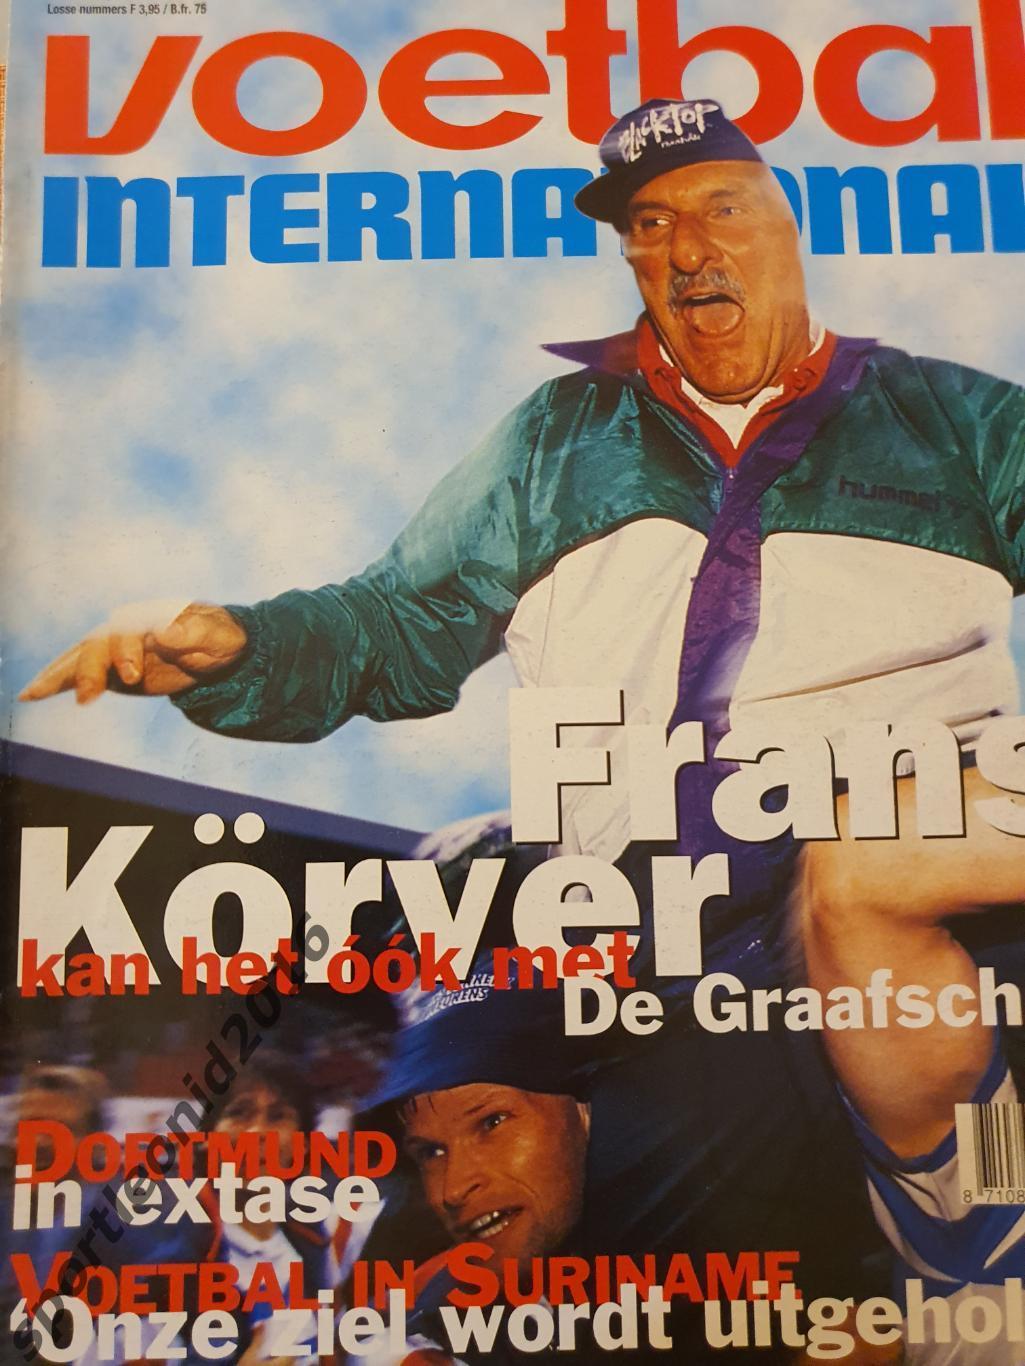 Voetbal International 1992-1994-1996 годов выпуска.12 журналов.3 4